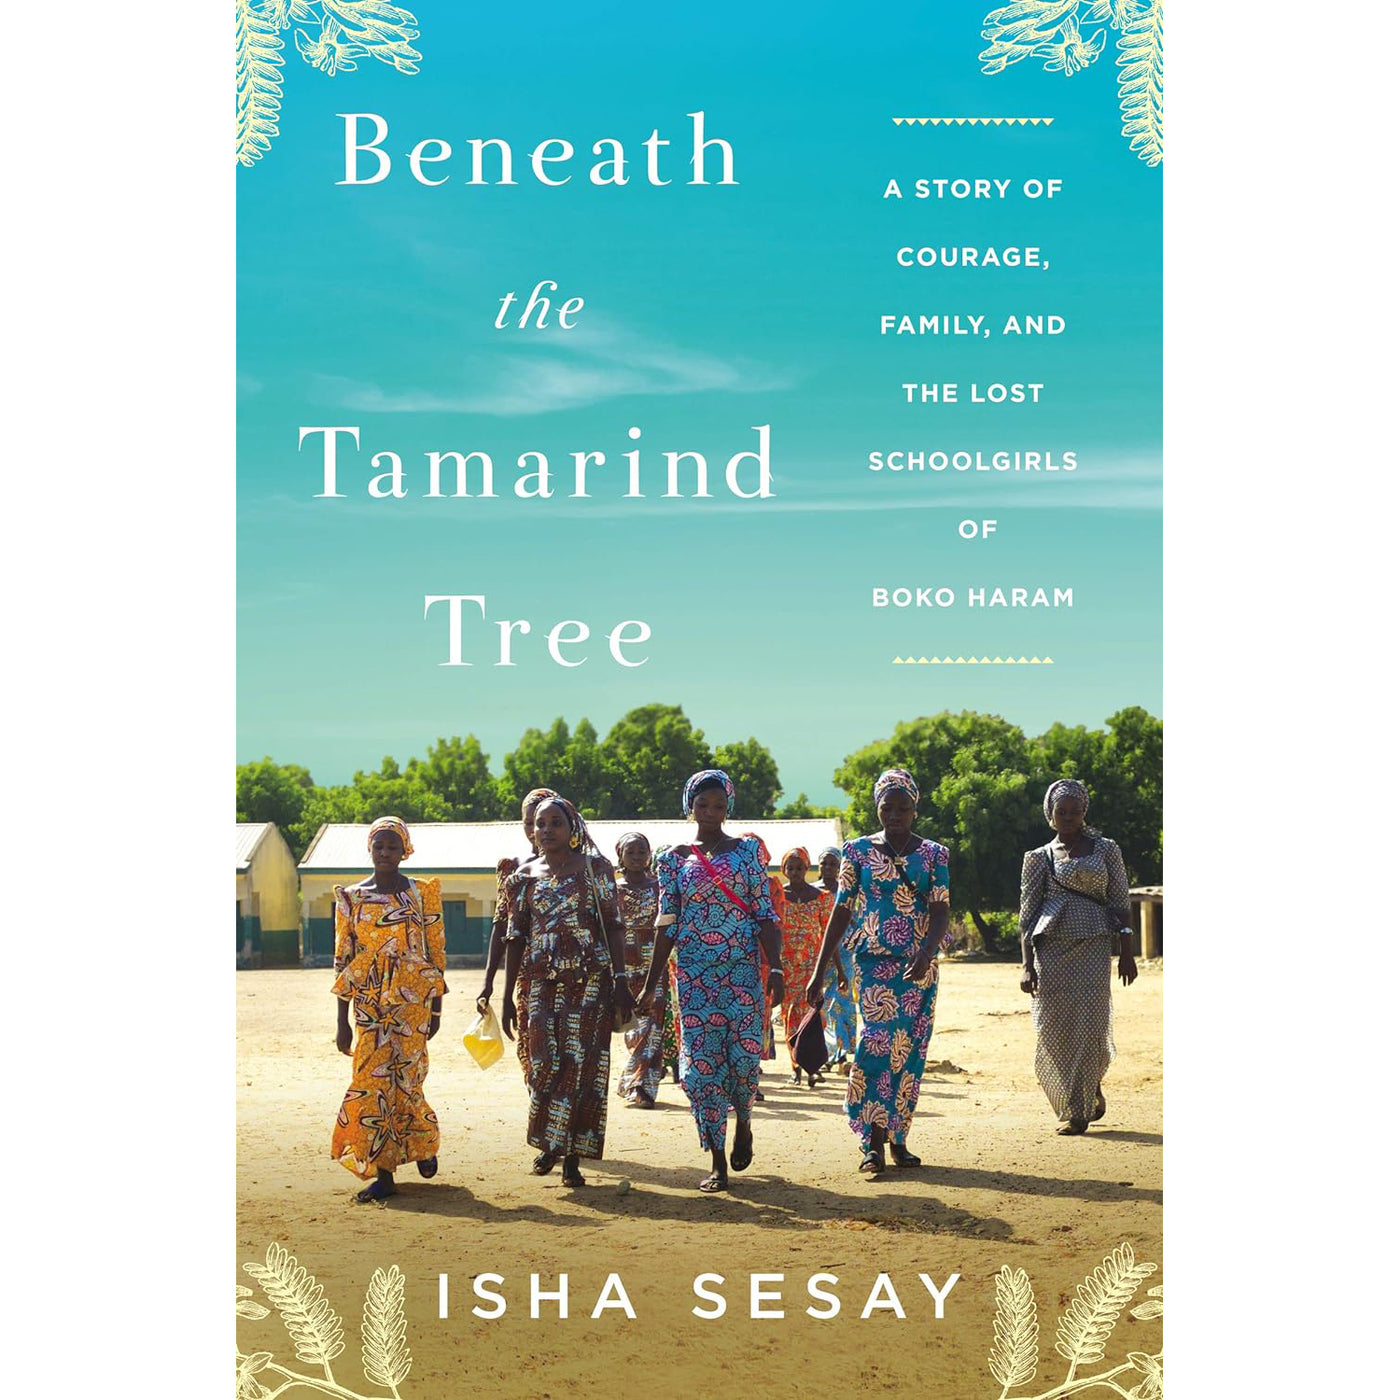 Beneath the Tamarind Tree by Isha Sesay